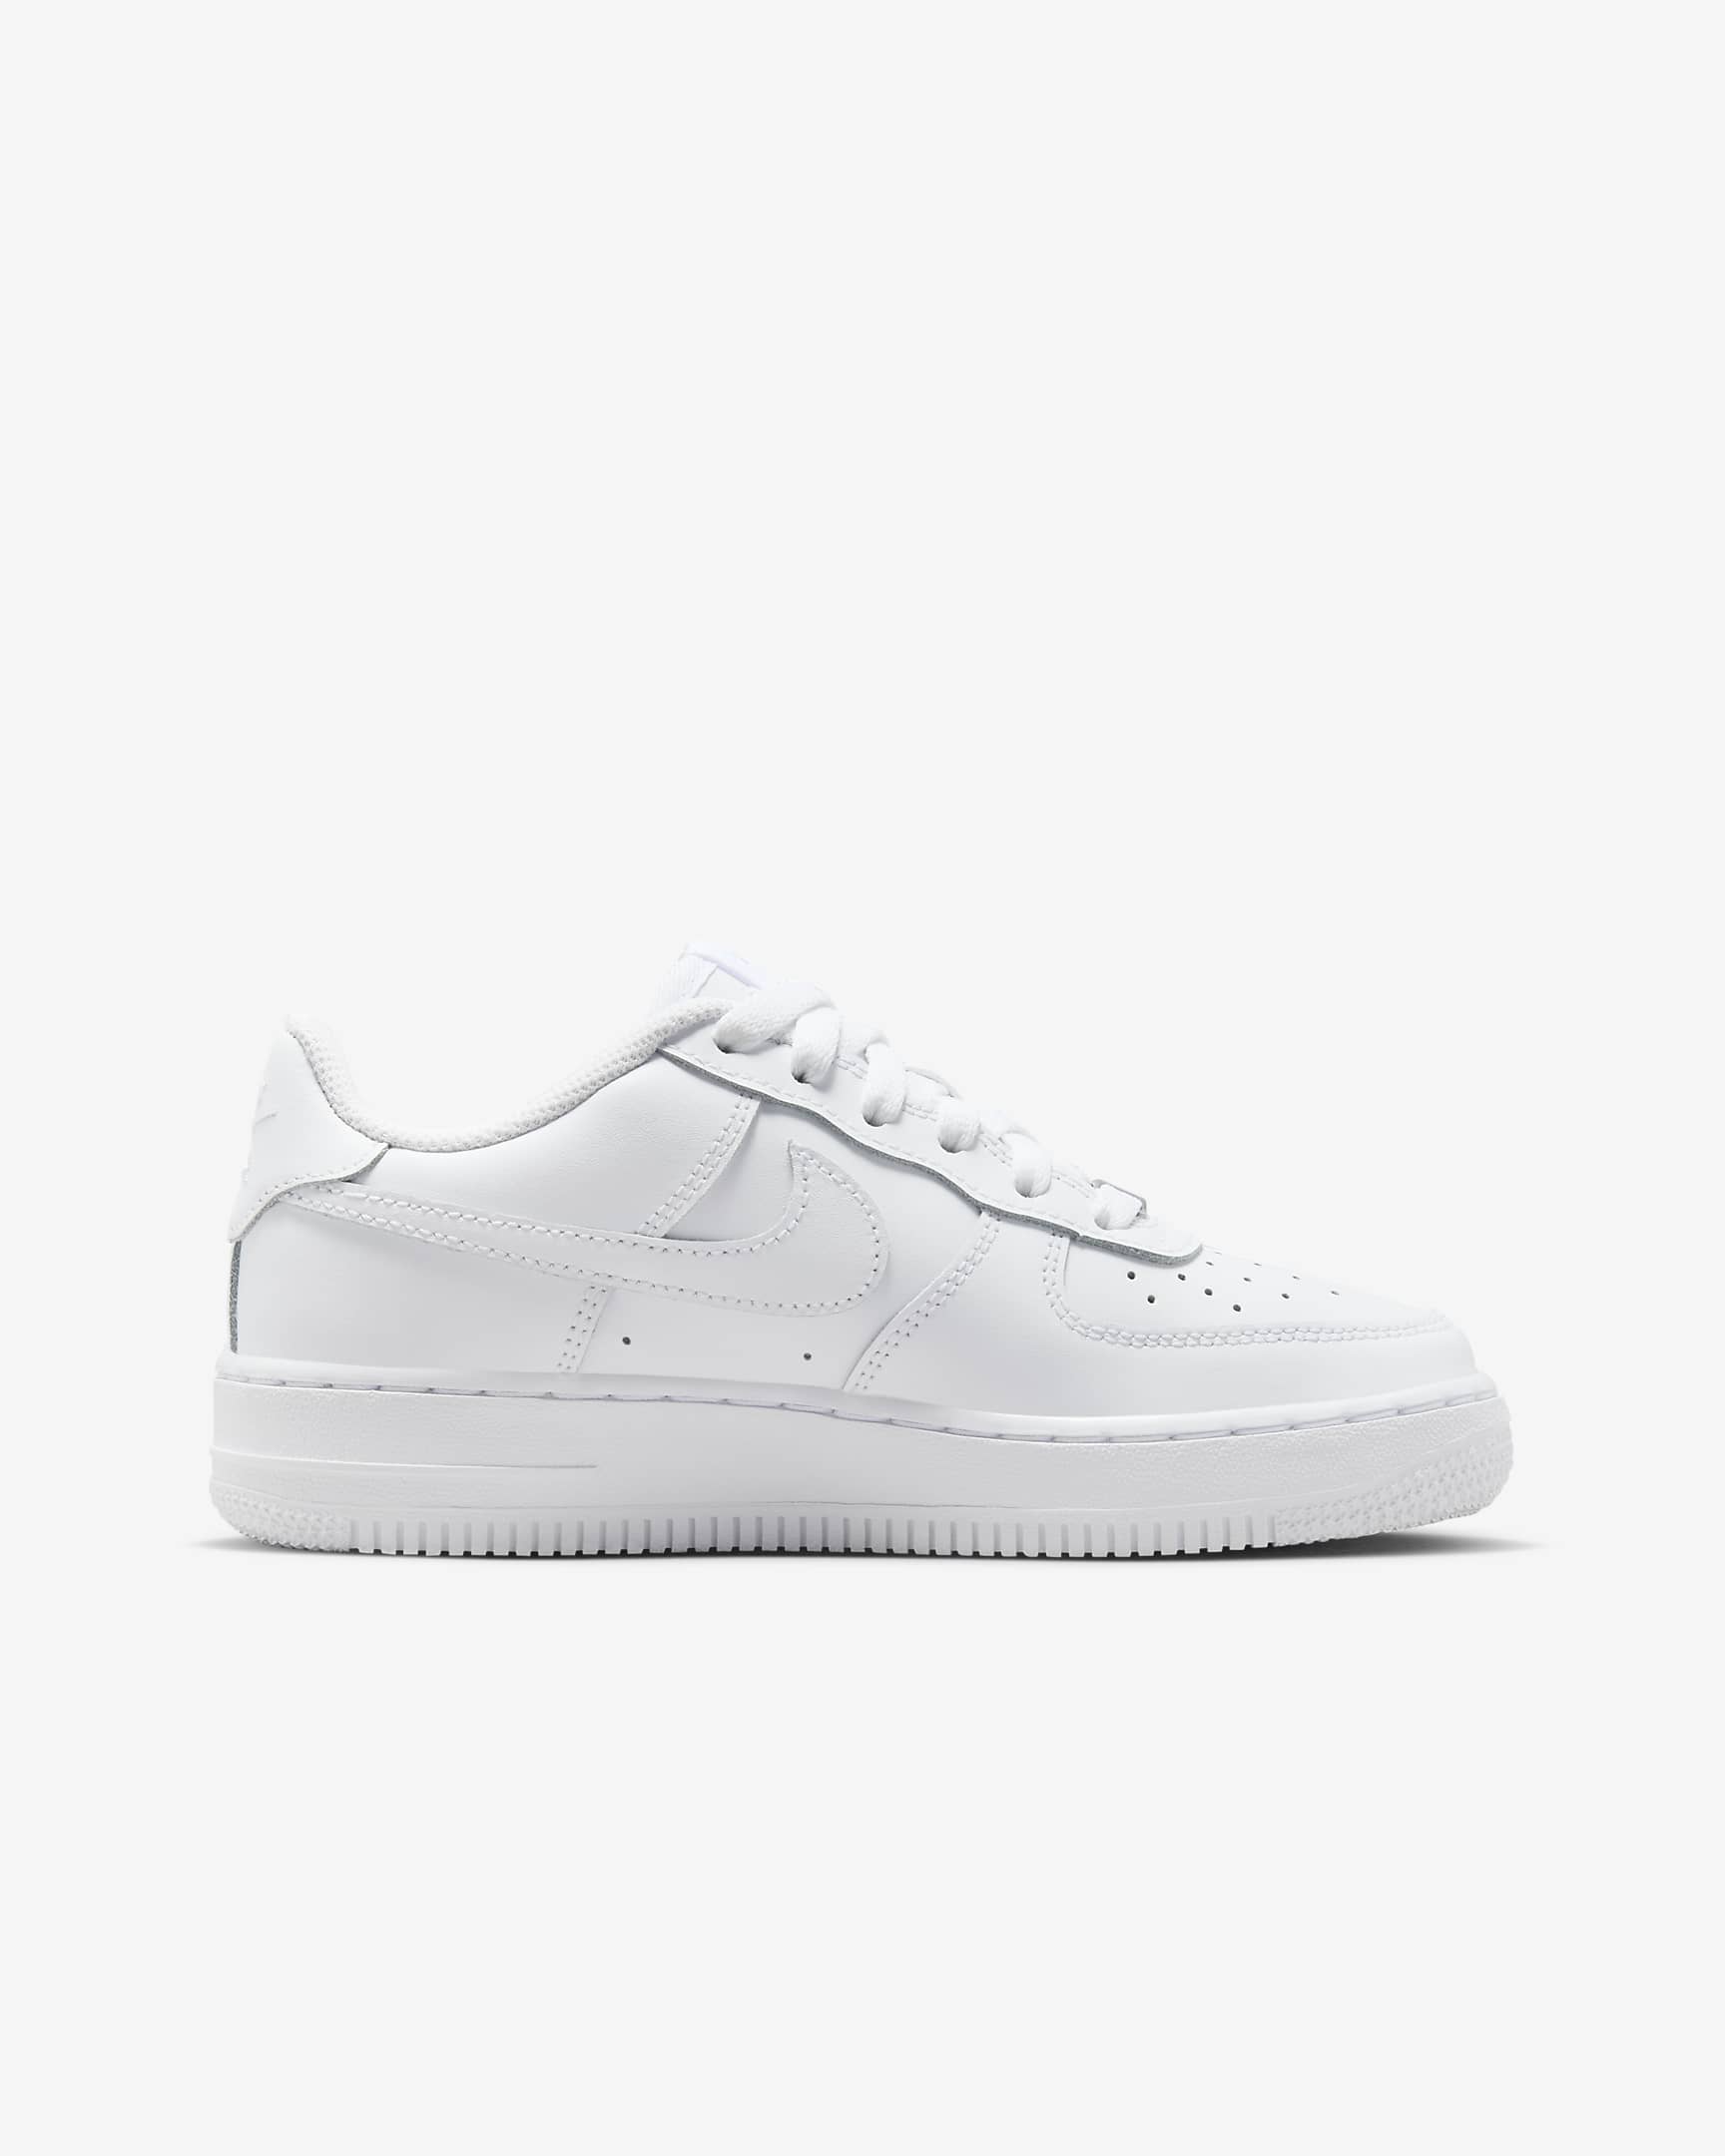 Nike Air Force 1 LE Older Kids' Shoes - White/White/White/White